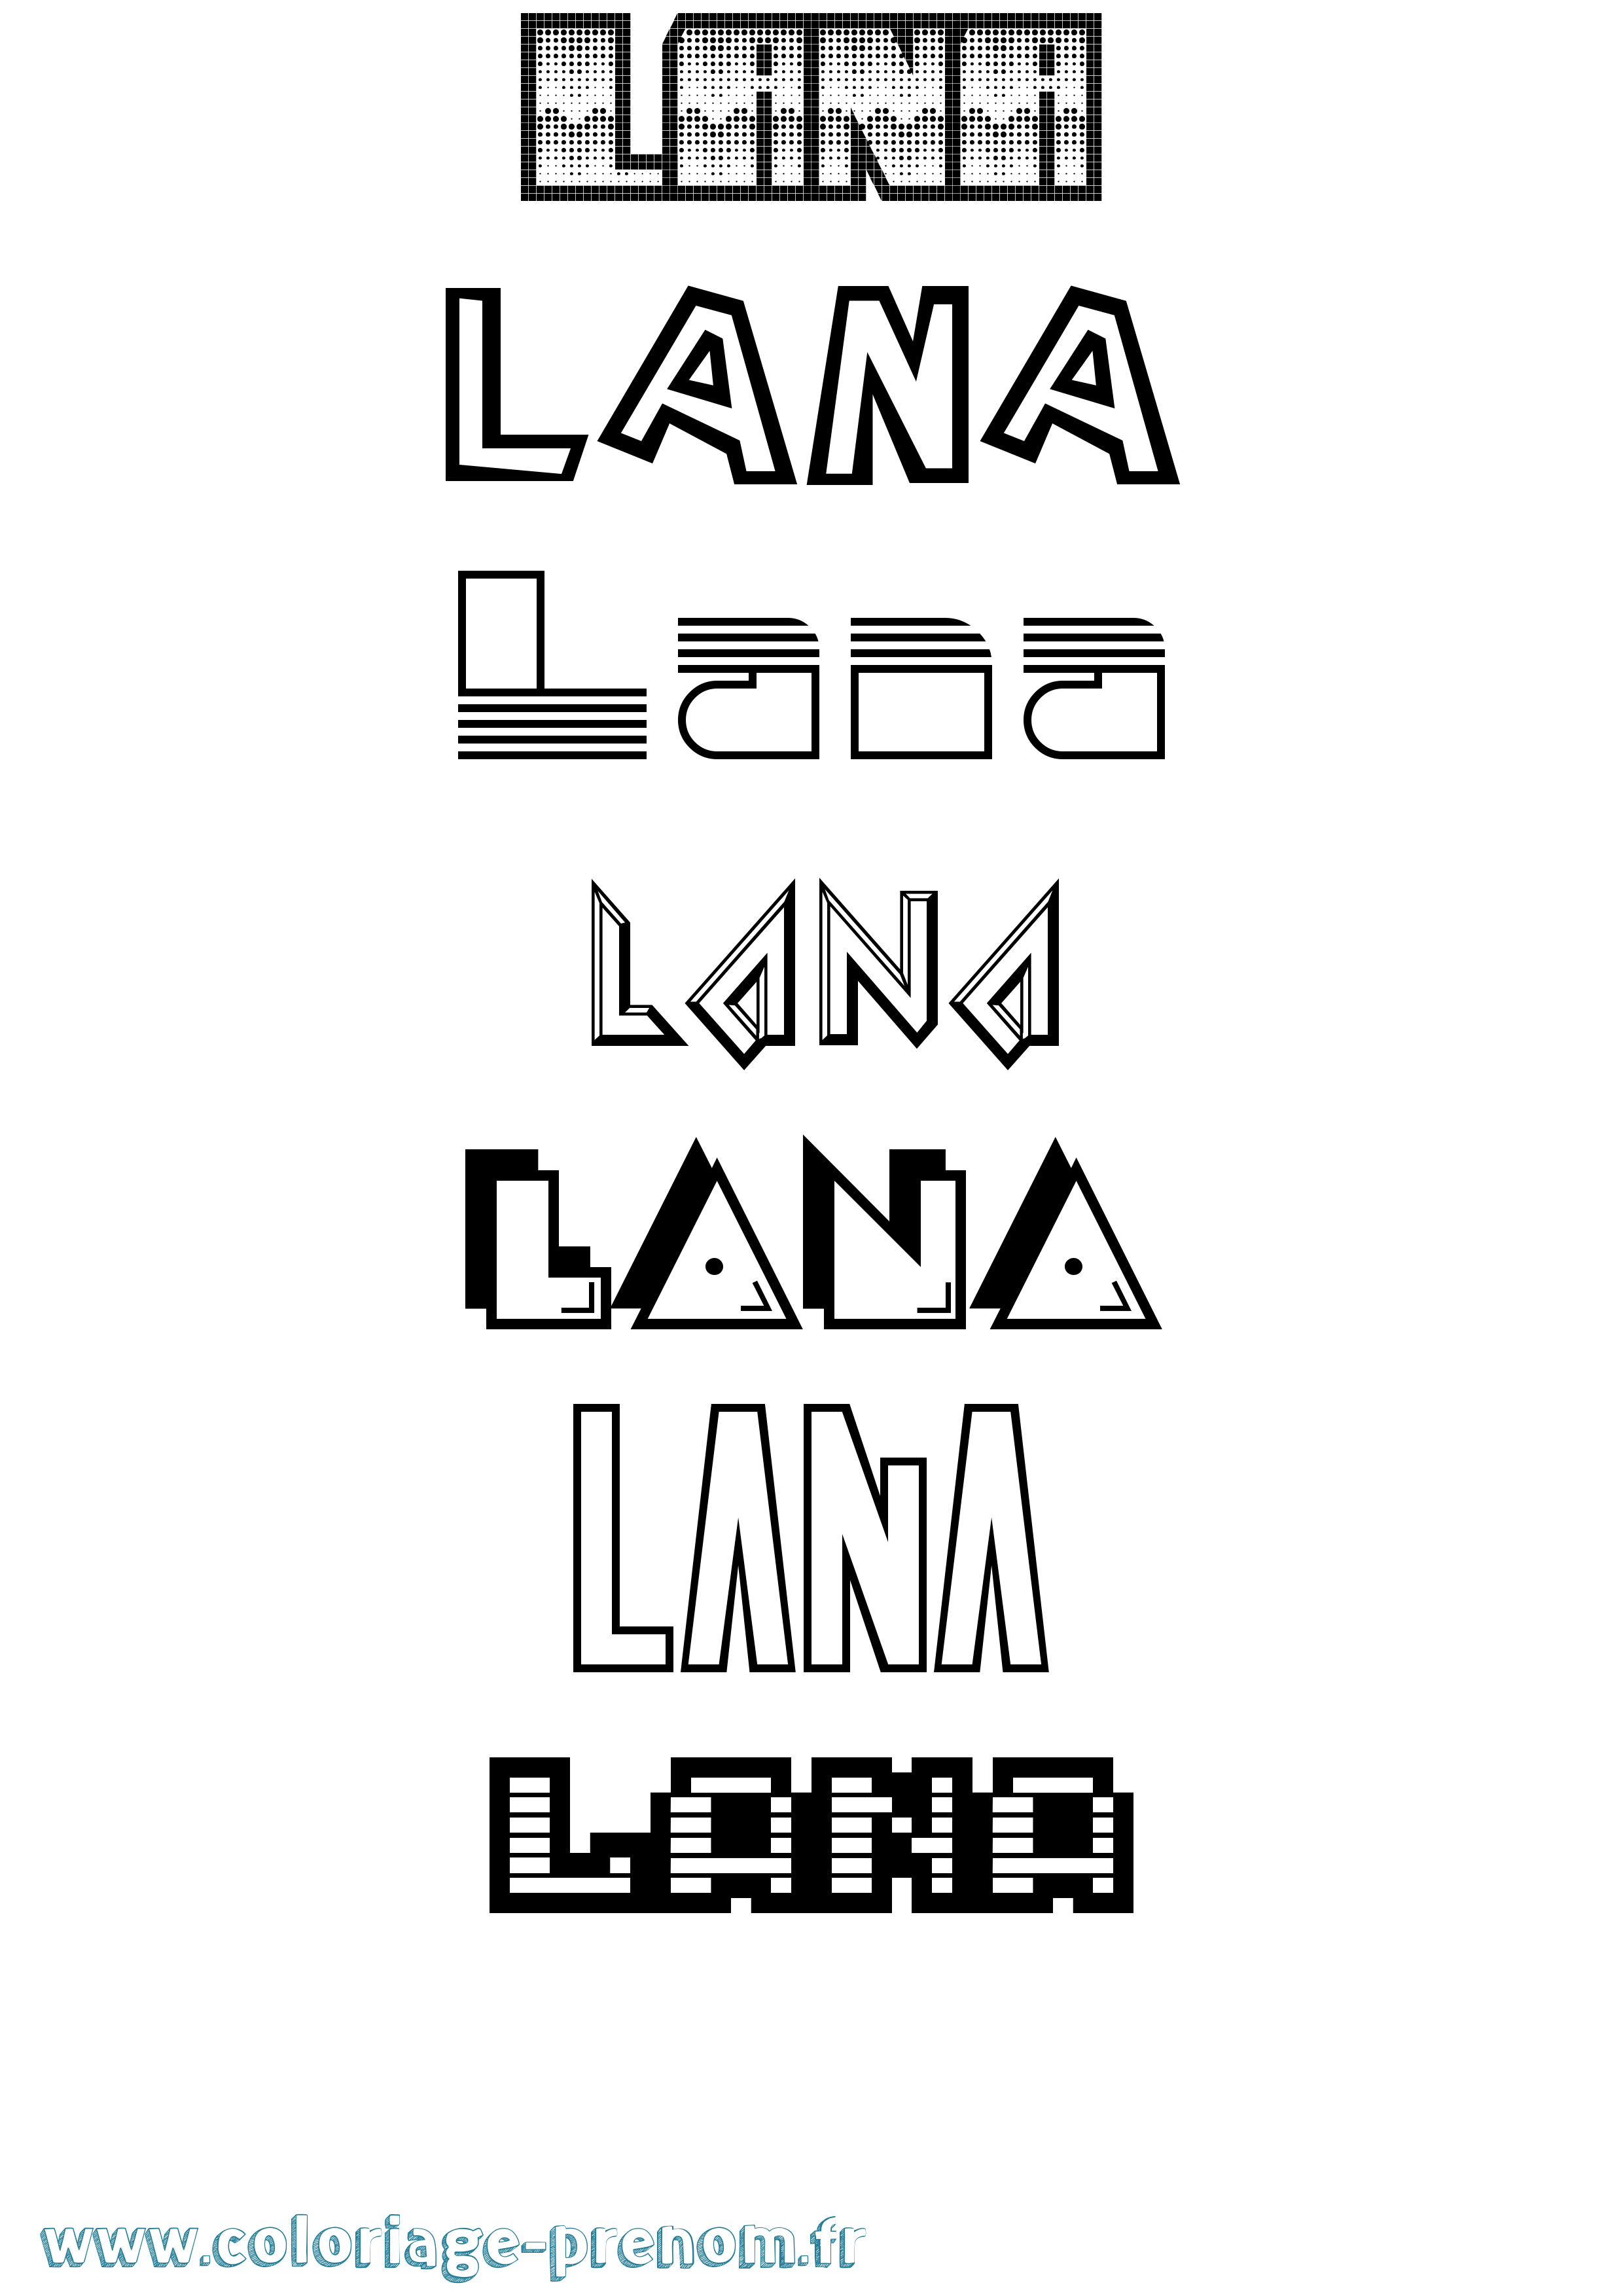 Coloriage prénom Lana